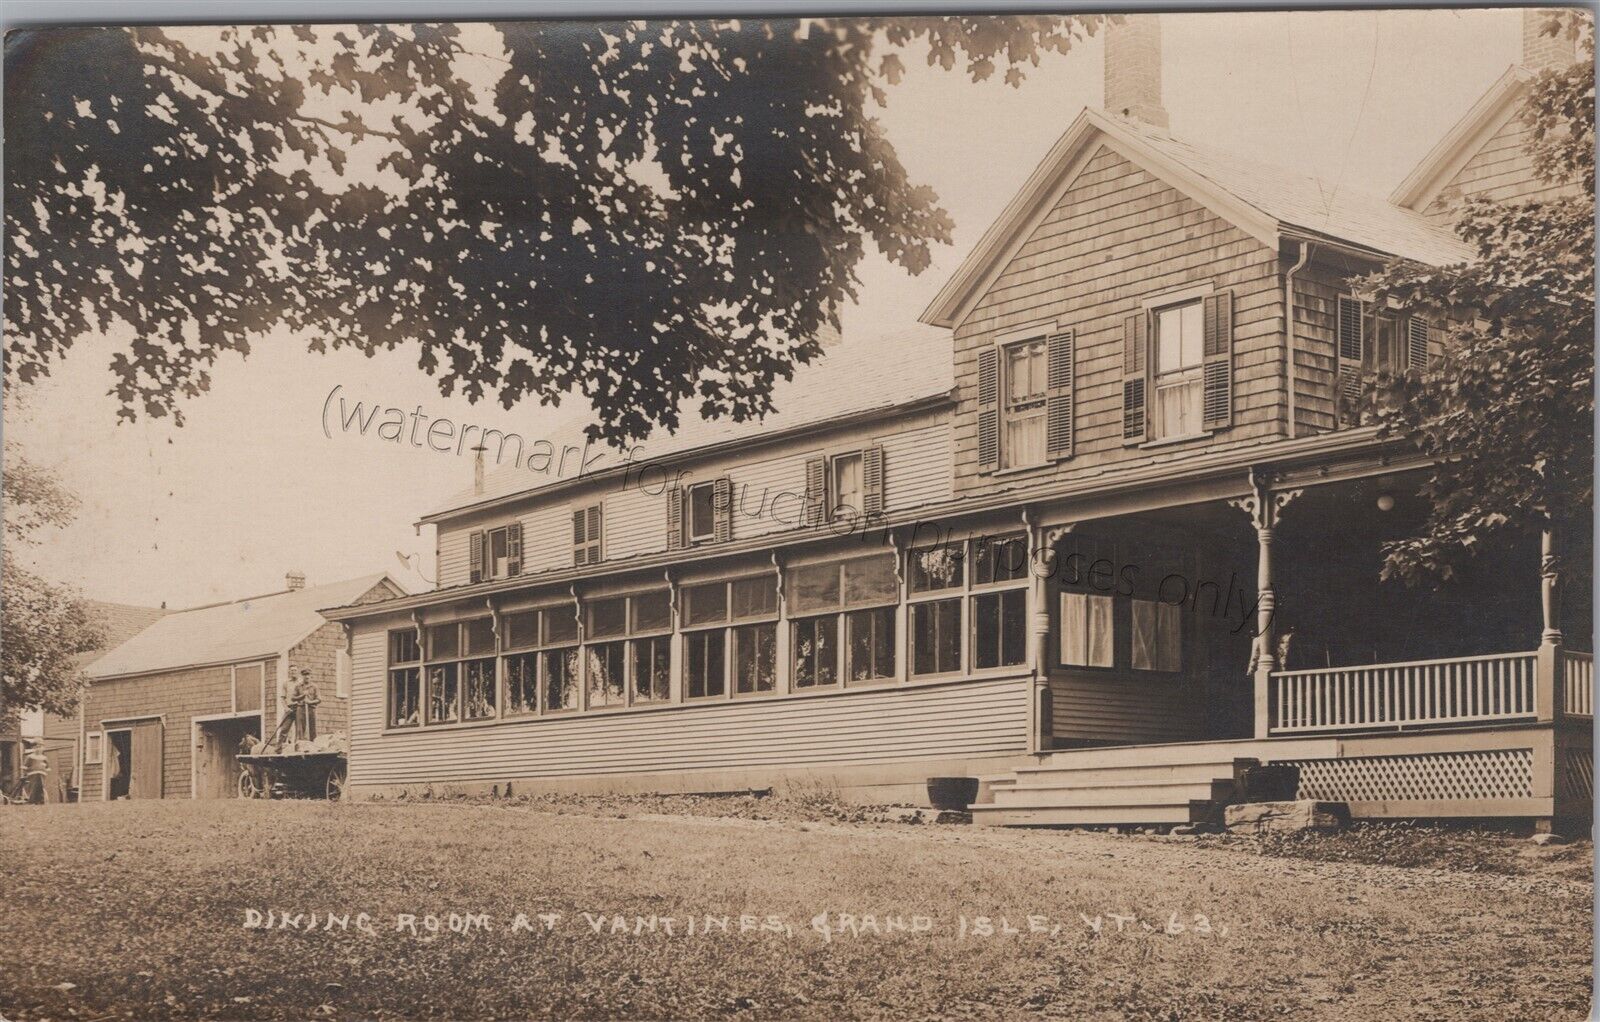 Grand Isle, VT: 1933 Vantines Dining Room RPPC - Vtg Vermont Real Photo Postcard